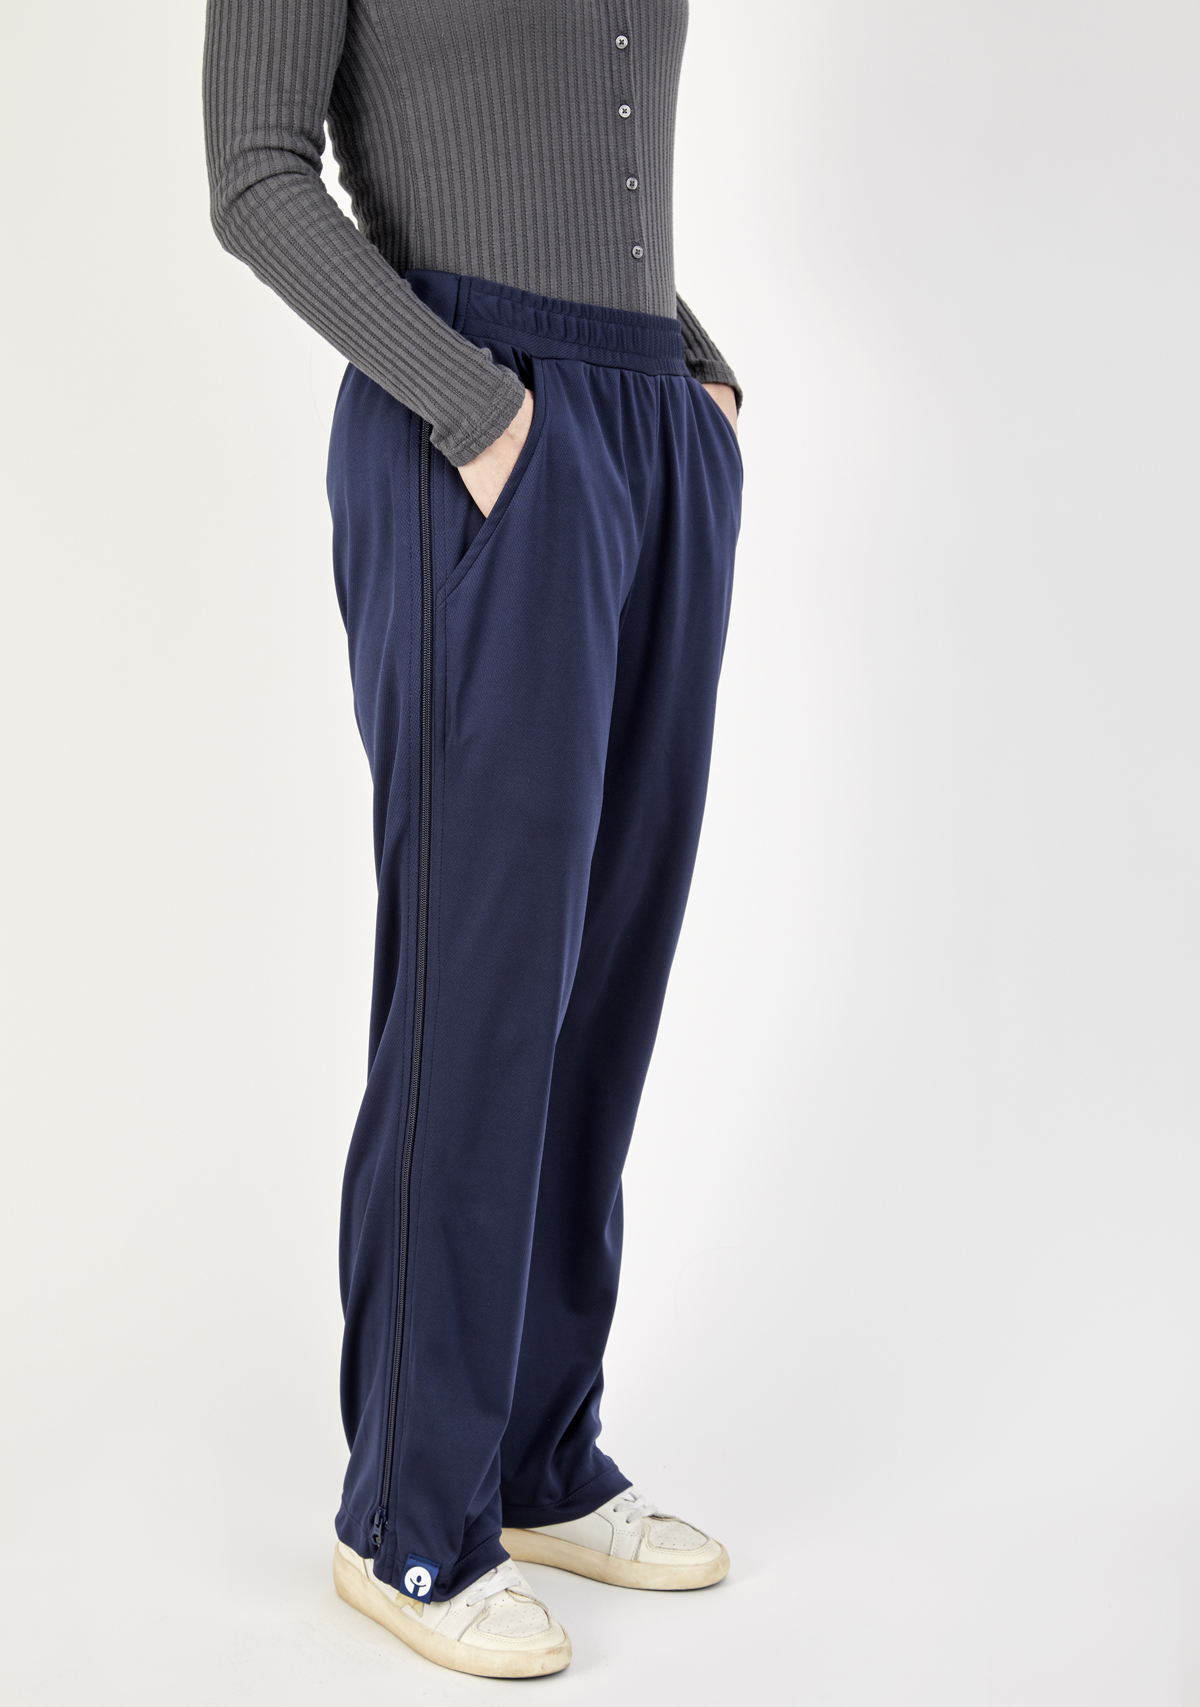 befree - zipOns adaptive pants, adaptive clothing, z...